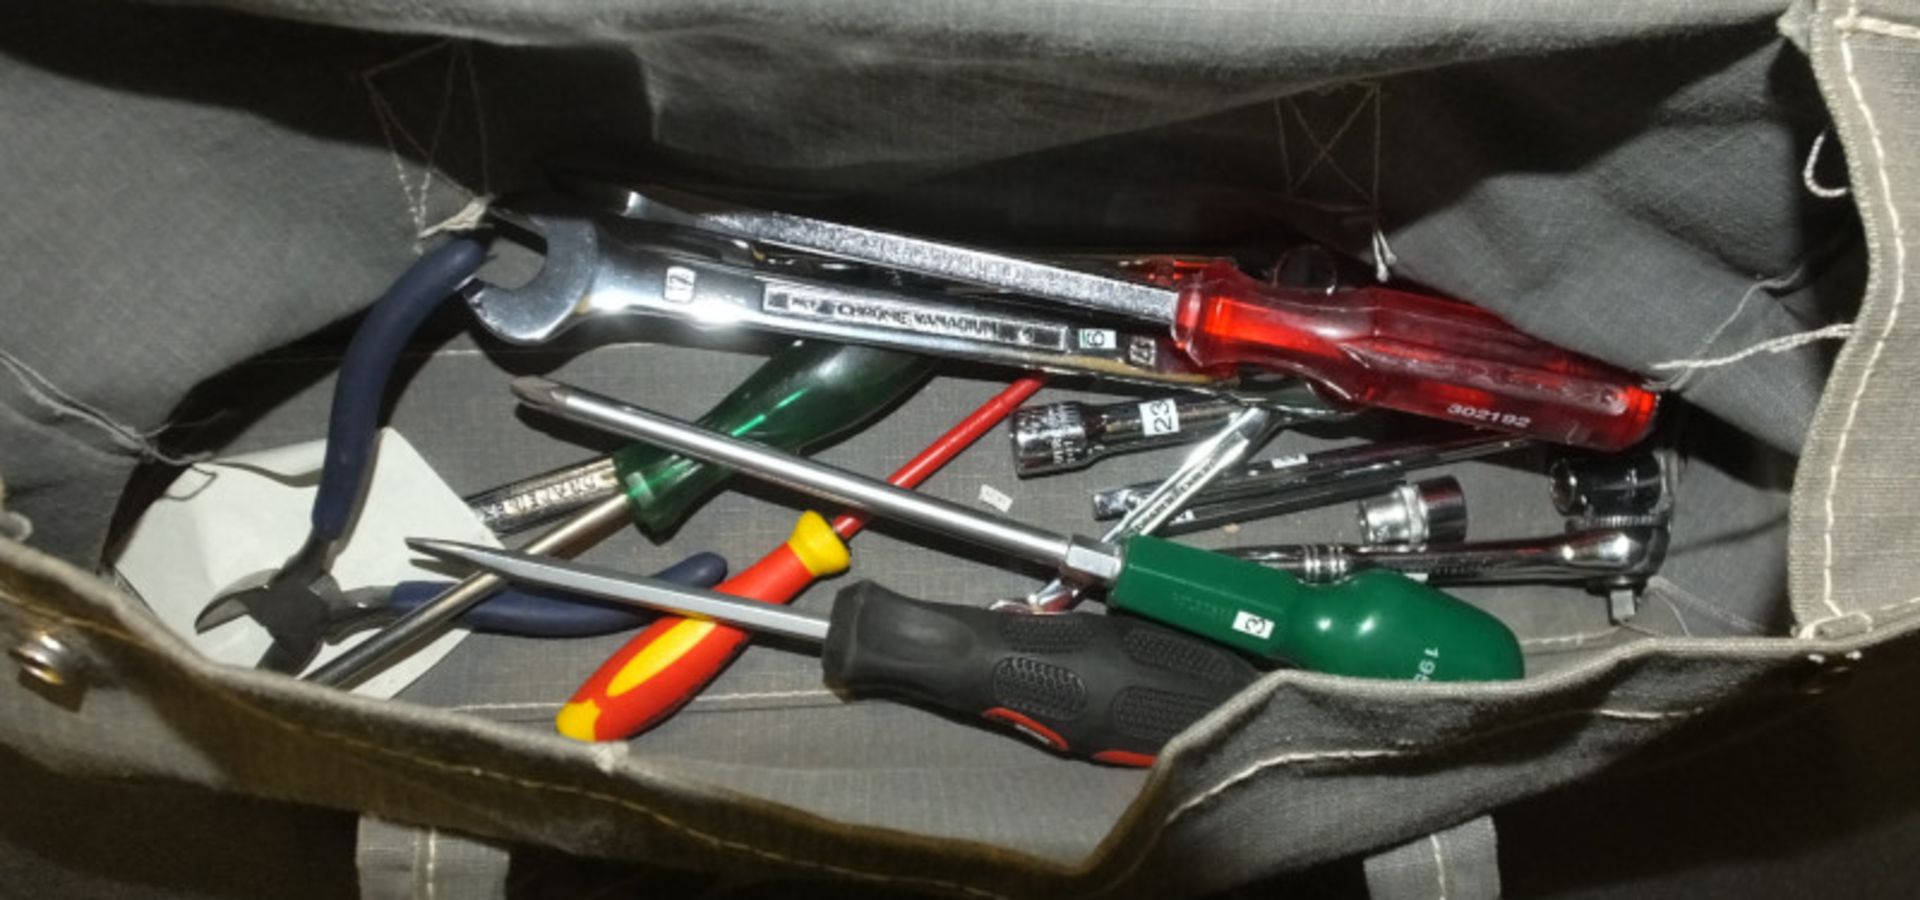 Tool Kit In Bag - Various Screwdrivers, Spanners, Cutters, Socket - Image 2 of 3